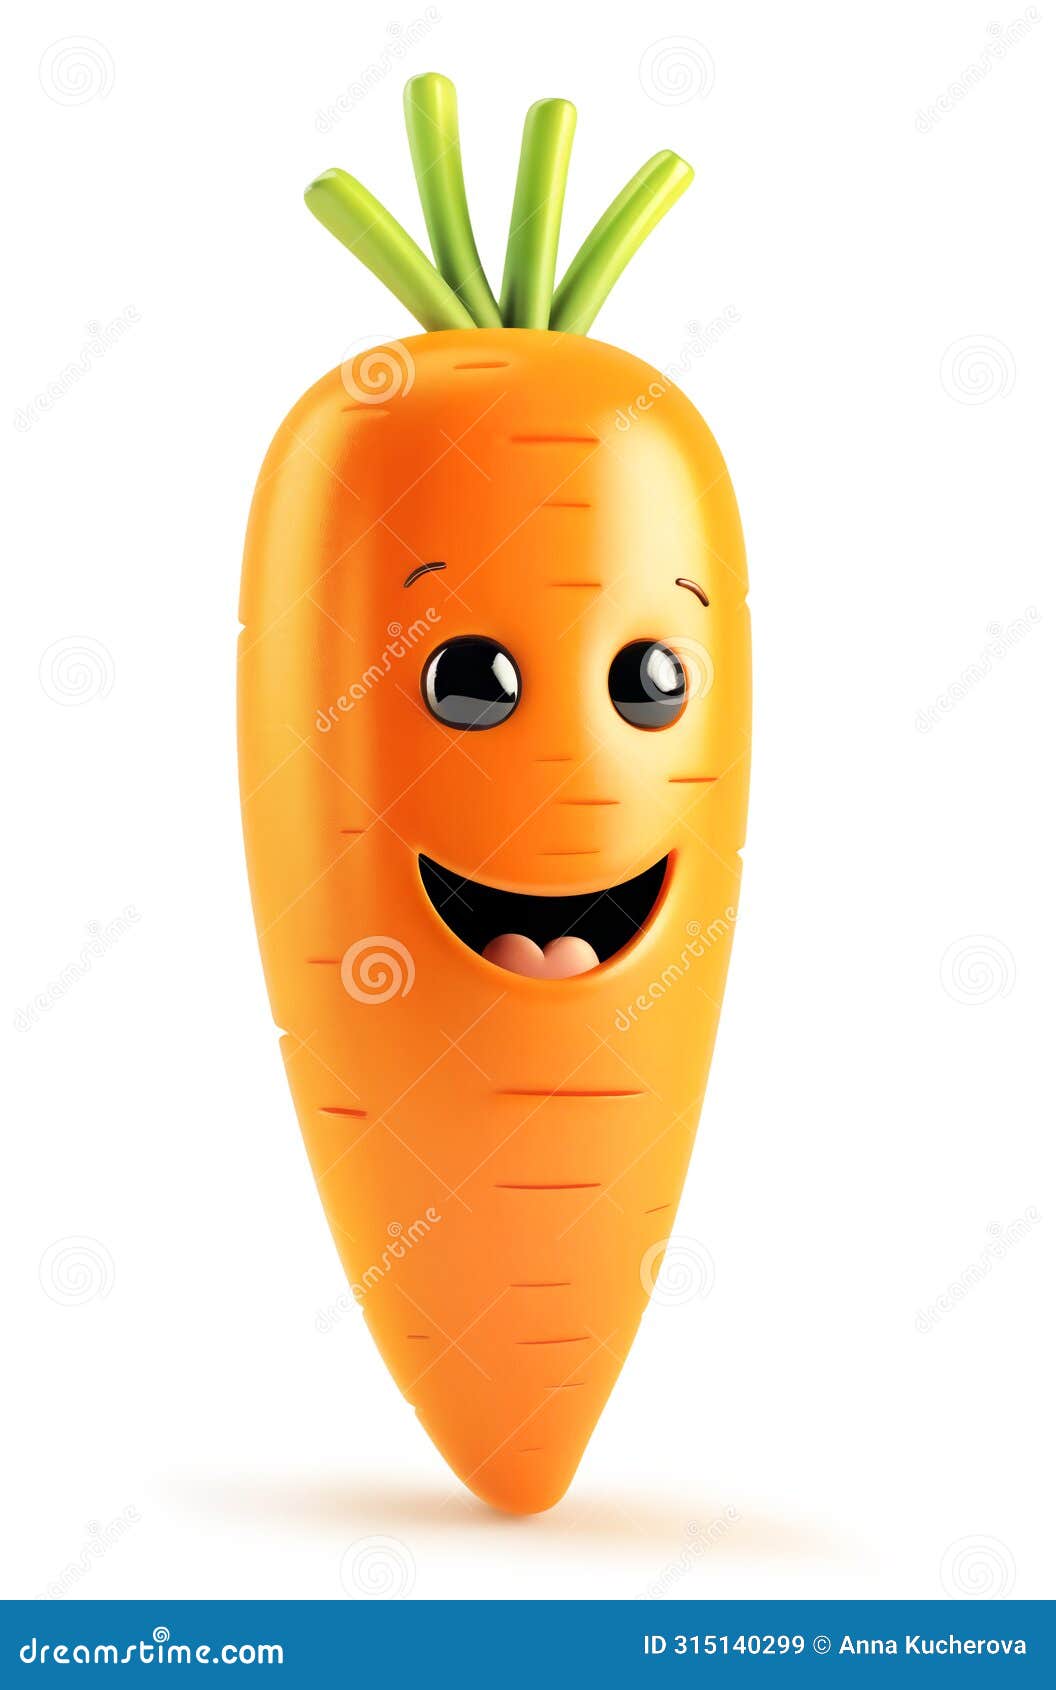 joyful carrot character with a big smile